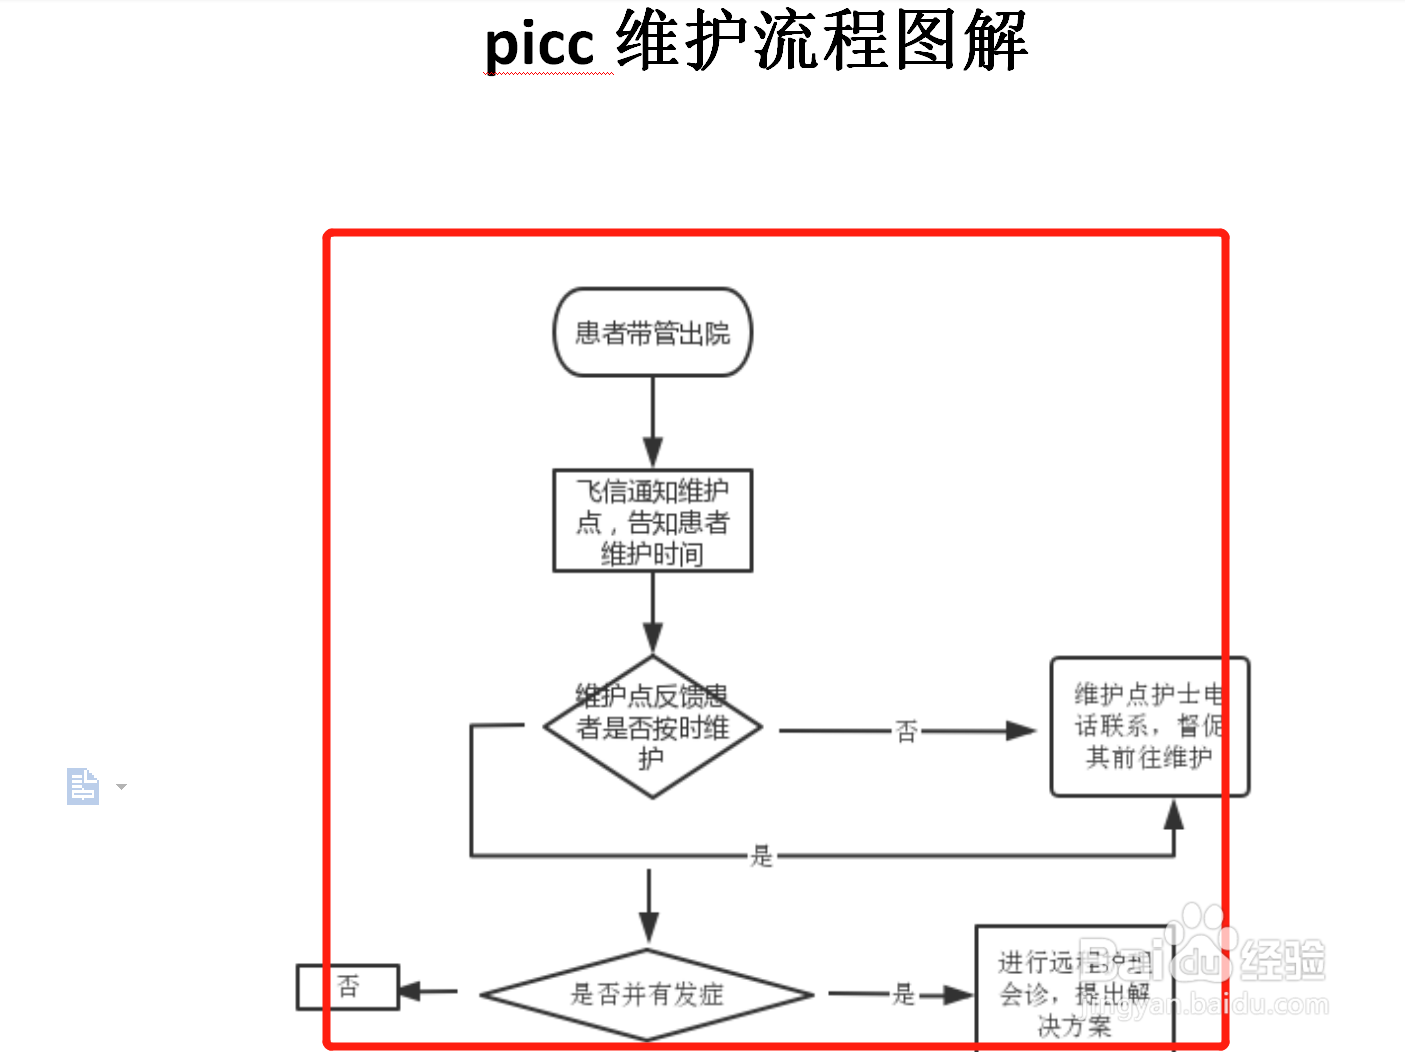 picc护理流程图图片